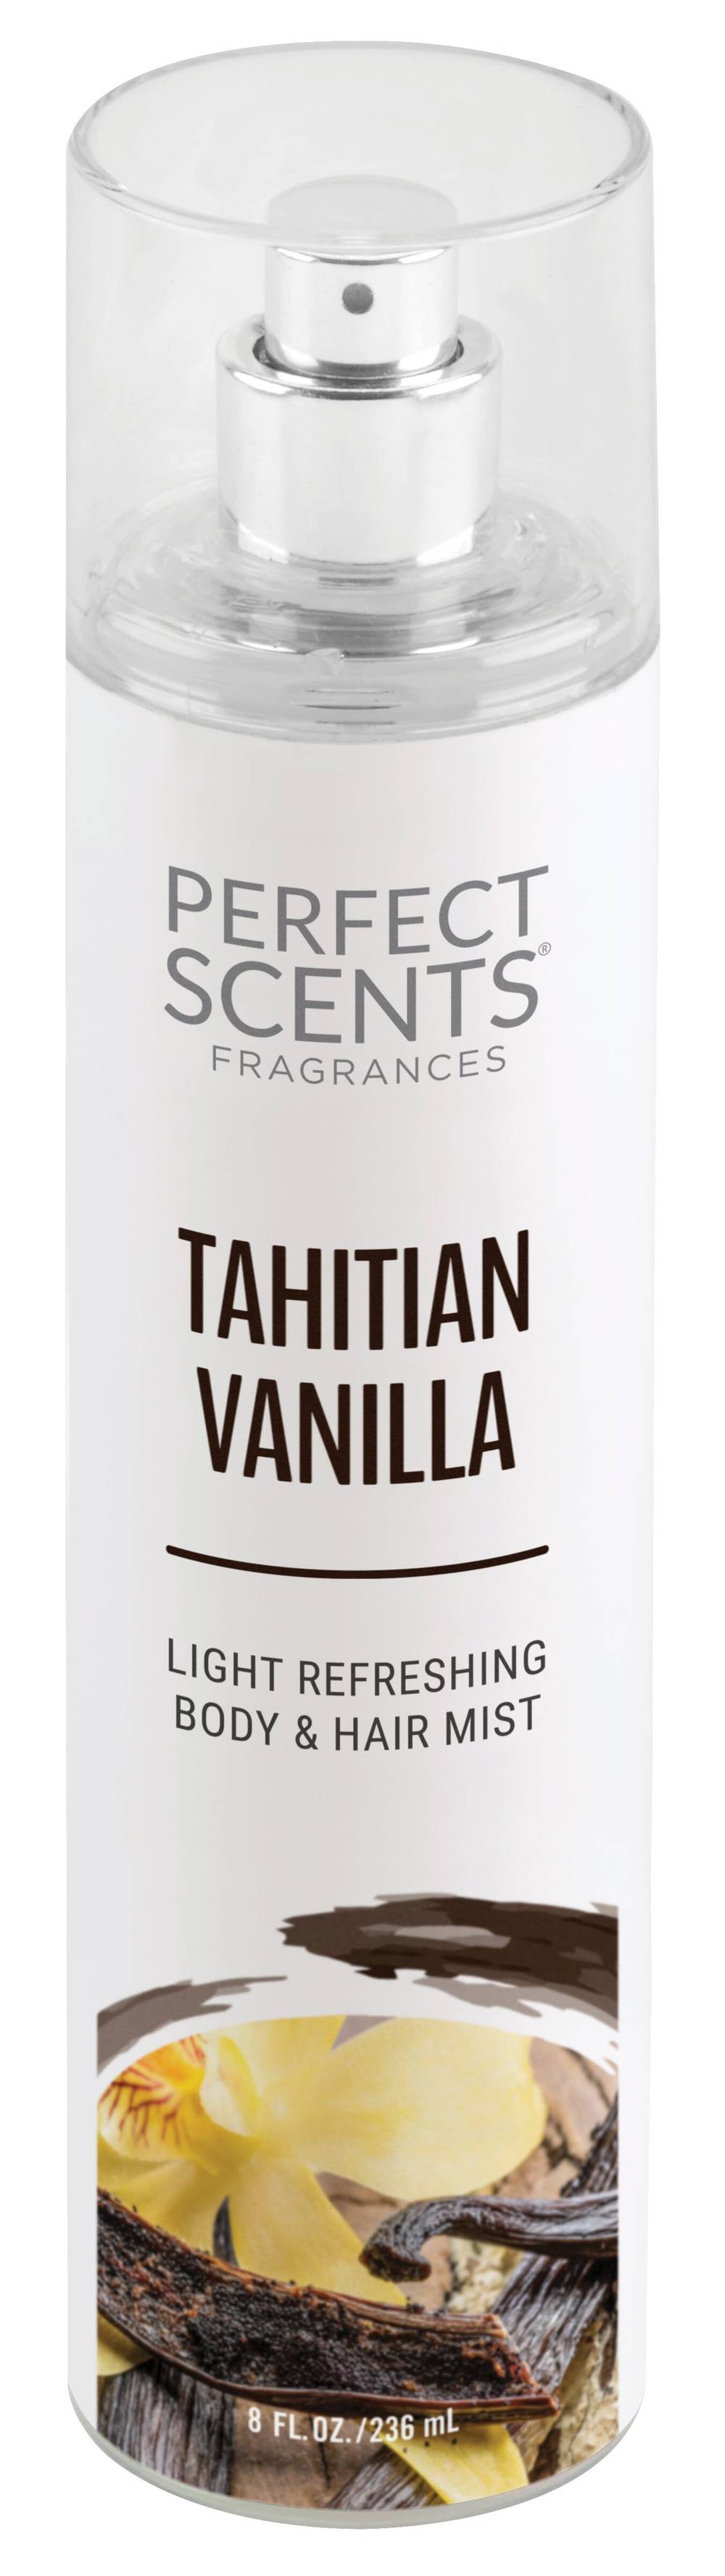 Perfect Scents Body & Hair Mist (tahitian vanilla)